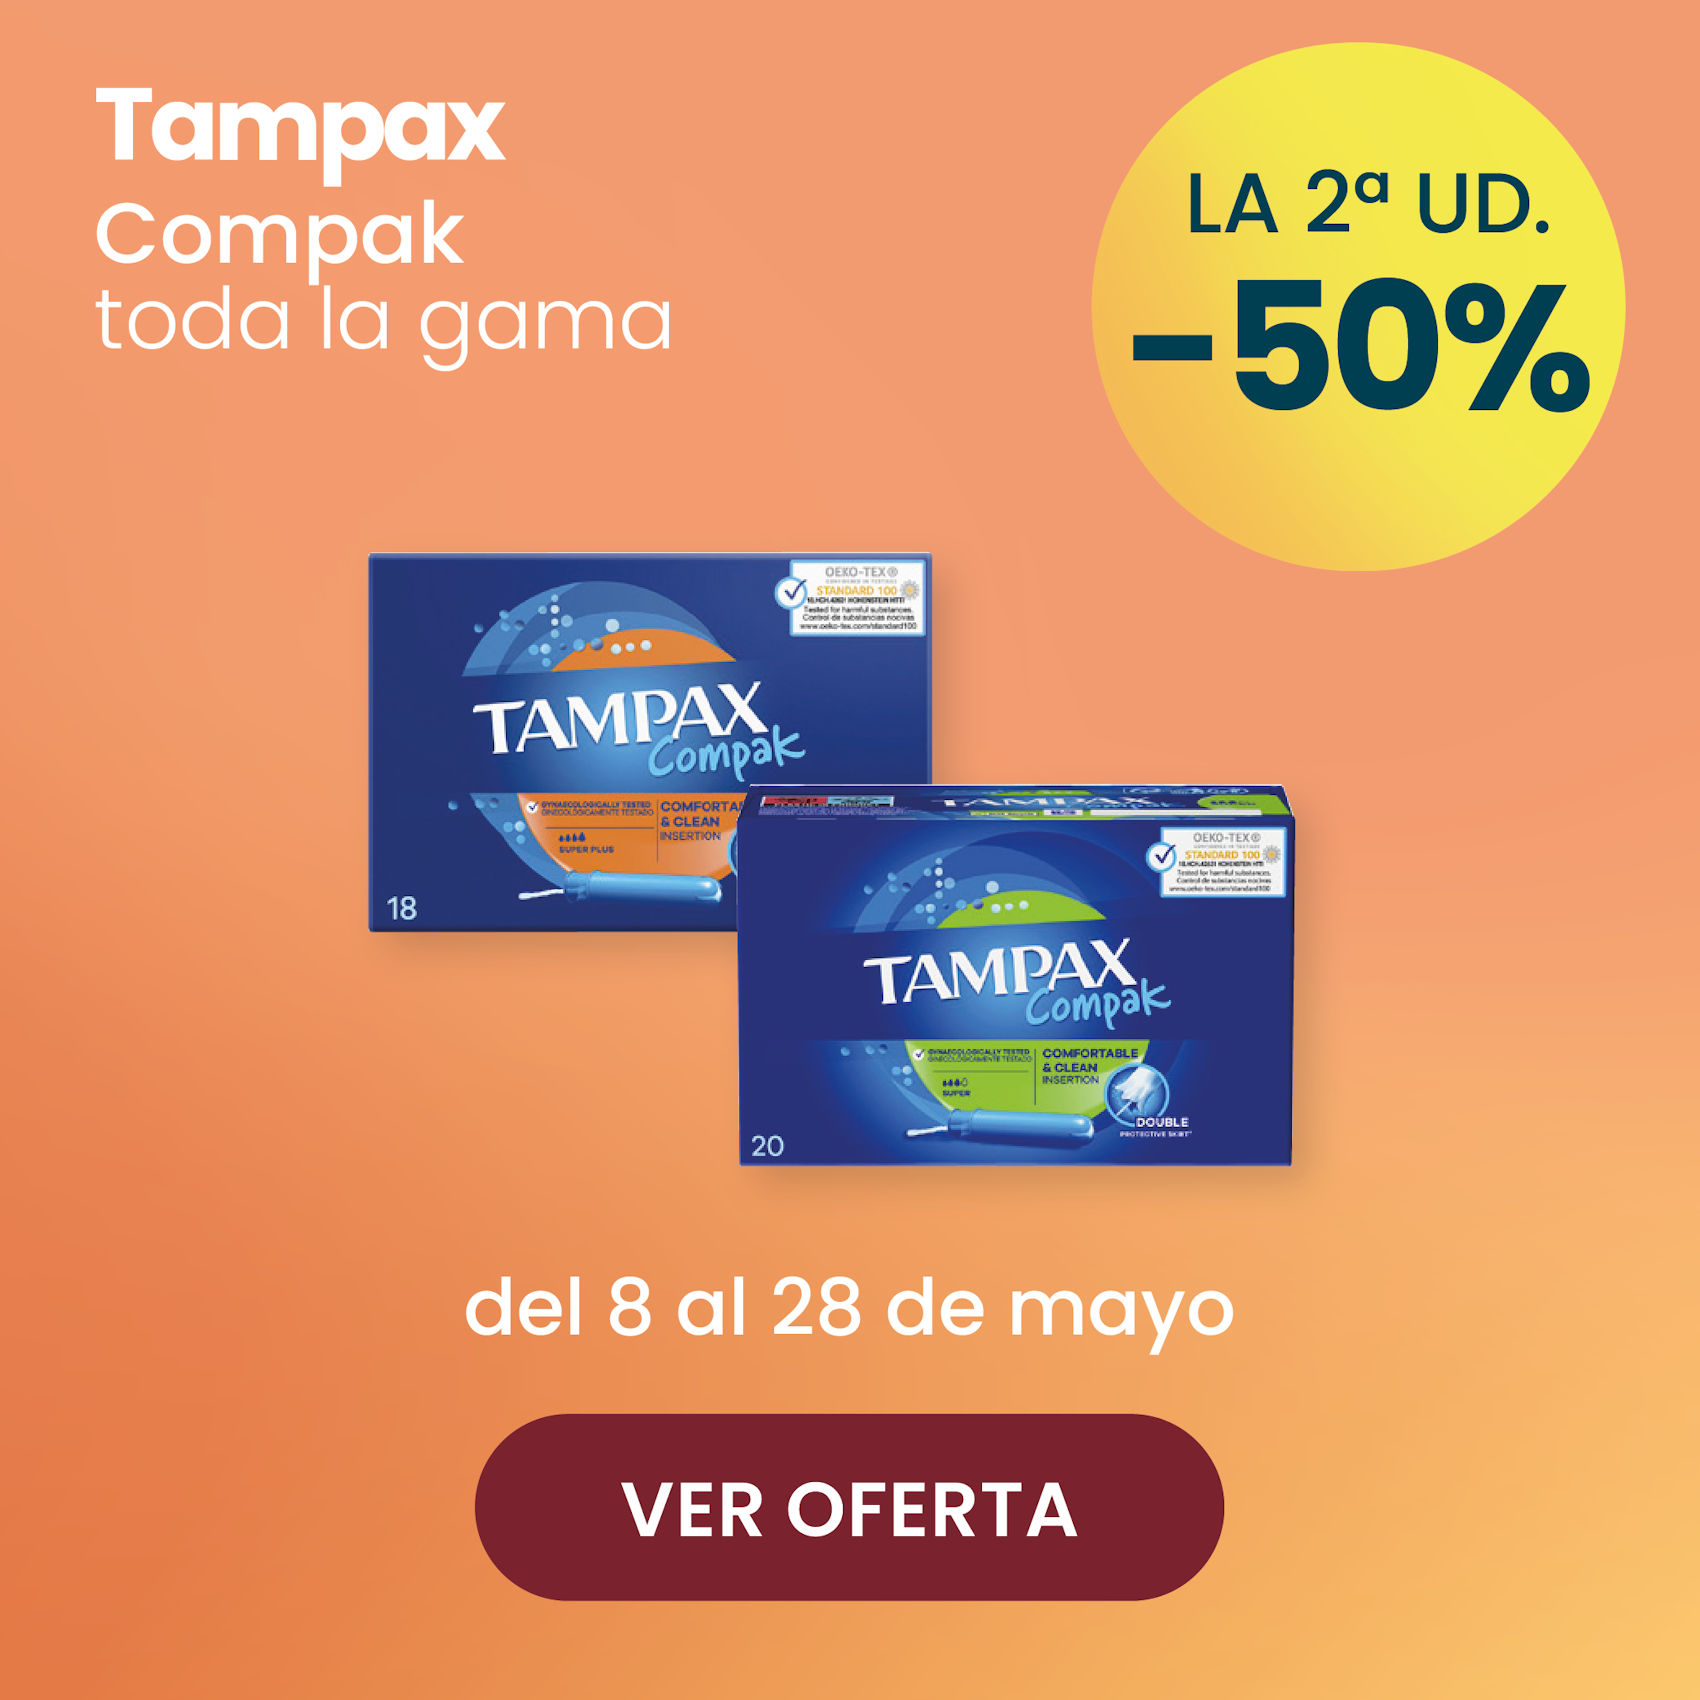 TAMPAX COMPAK TODA LA GAMA -50% la 2ª ud.